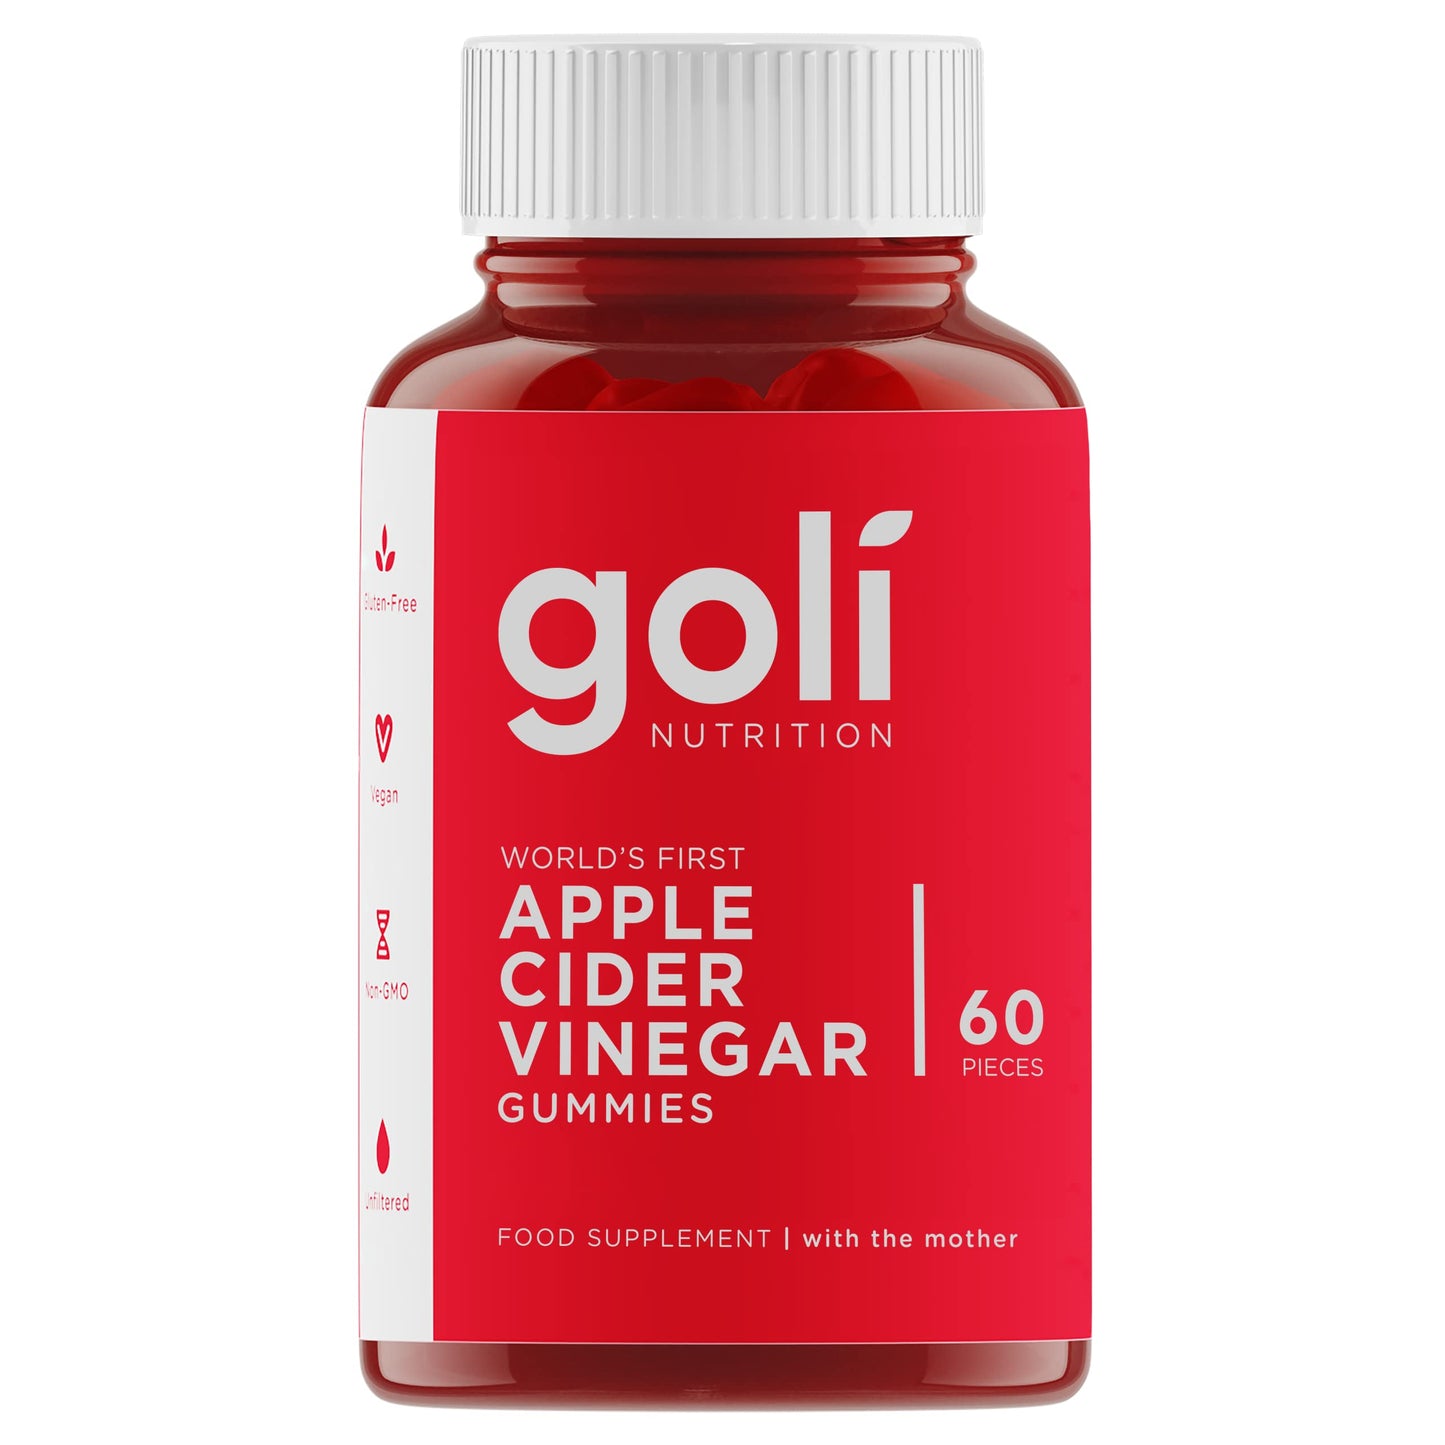 Goli Apple Cider Vinegar Gummy Vitamins - 60 Count - Vitamin B12, Gelatin-Free, Gluten-Free, Vegan & Non-GMO - Medaid - Lebanon